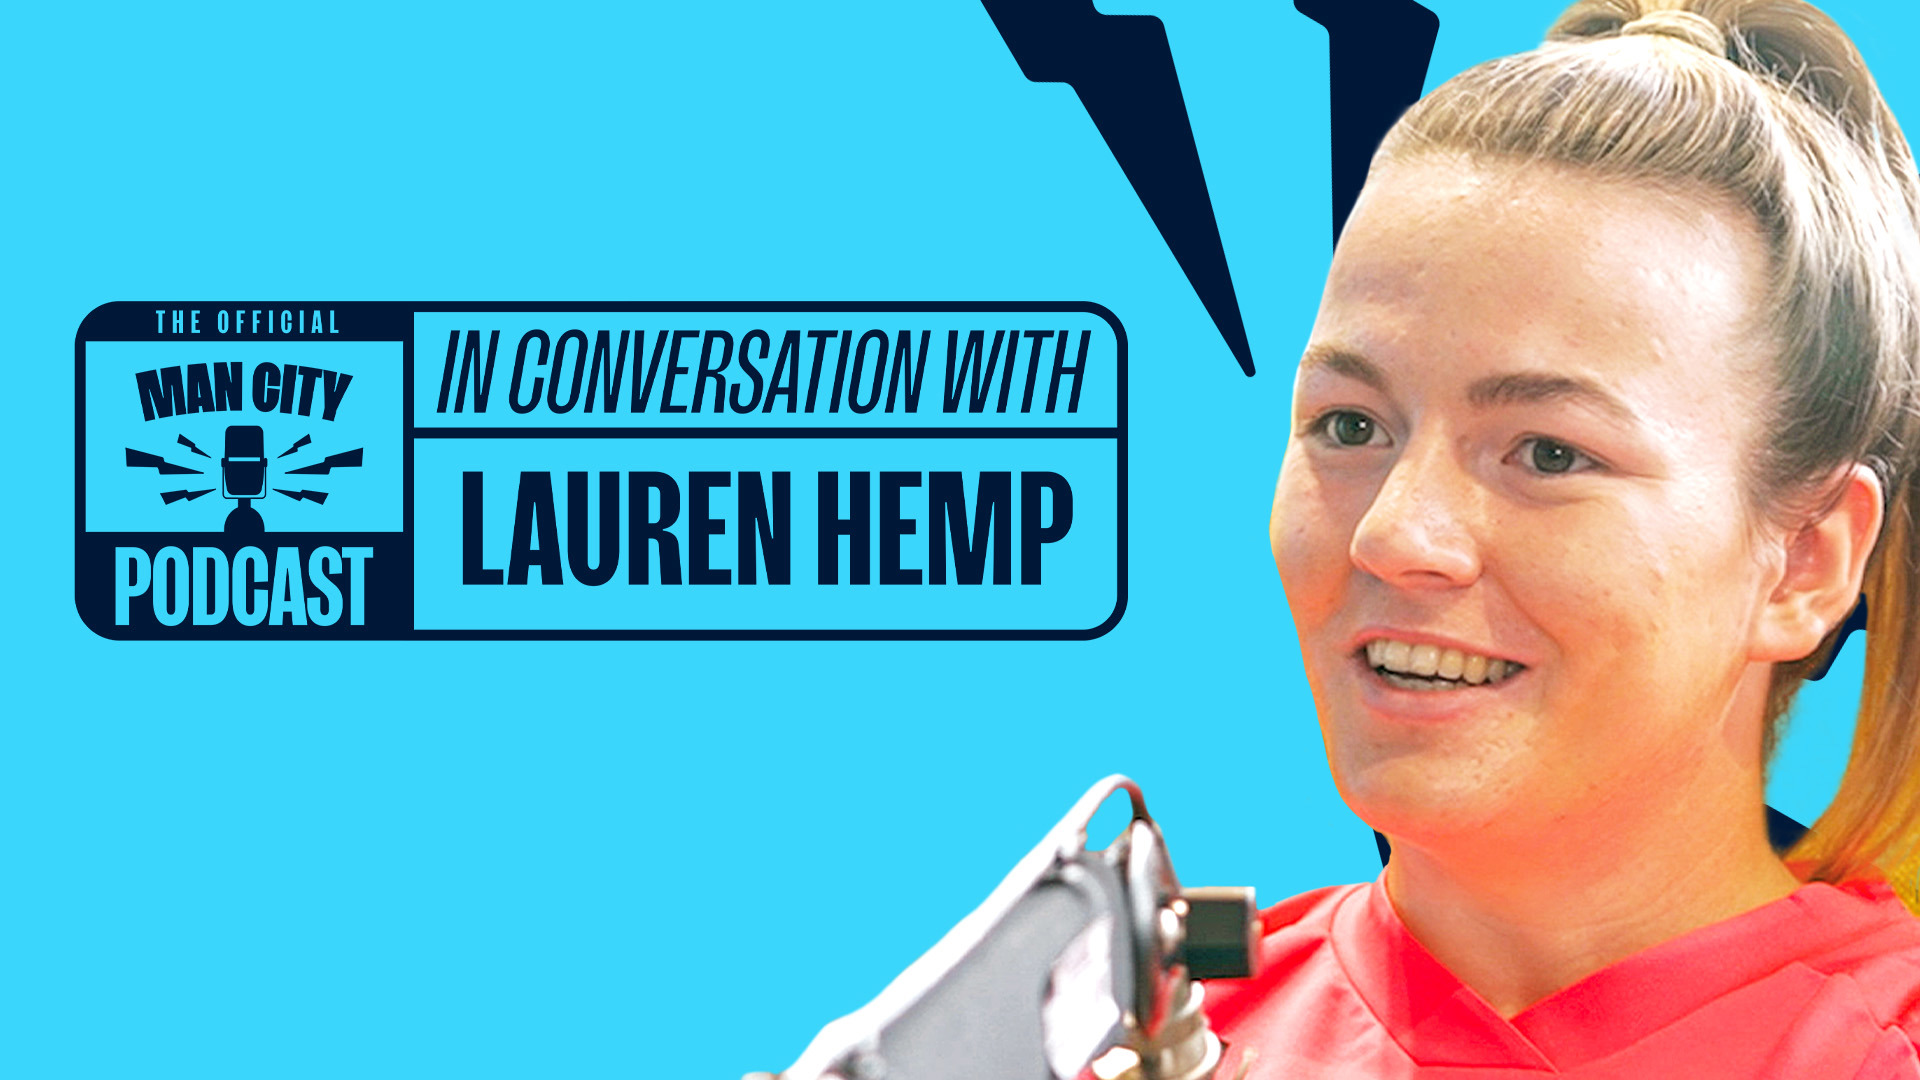 In Conversation with Lauren Hemp | Official Man City Podcast